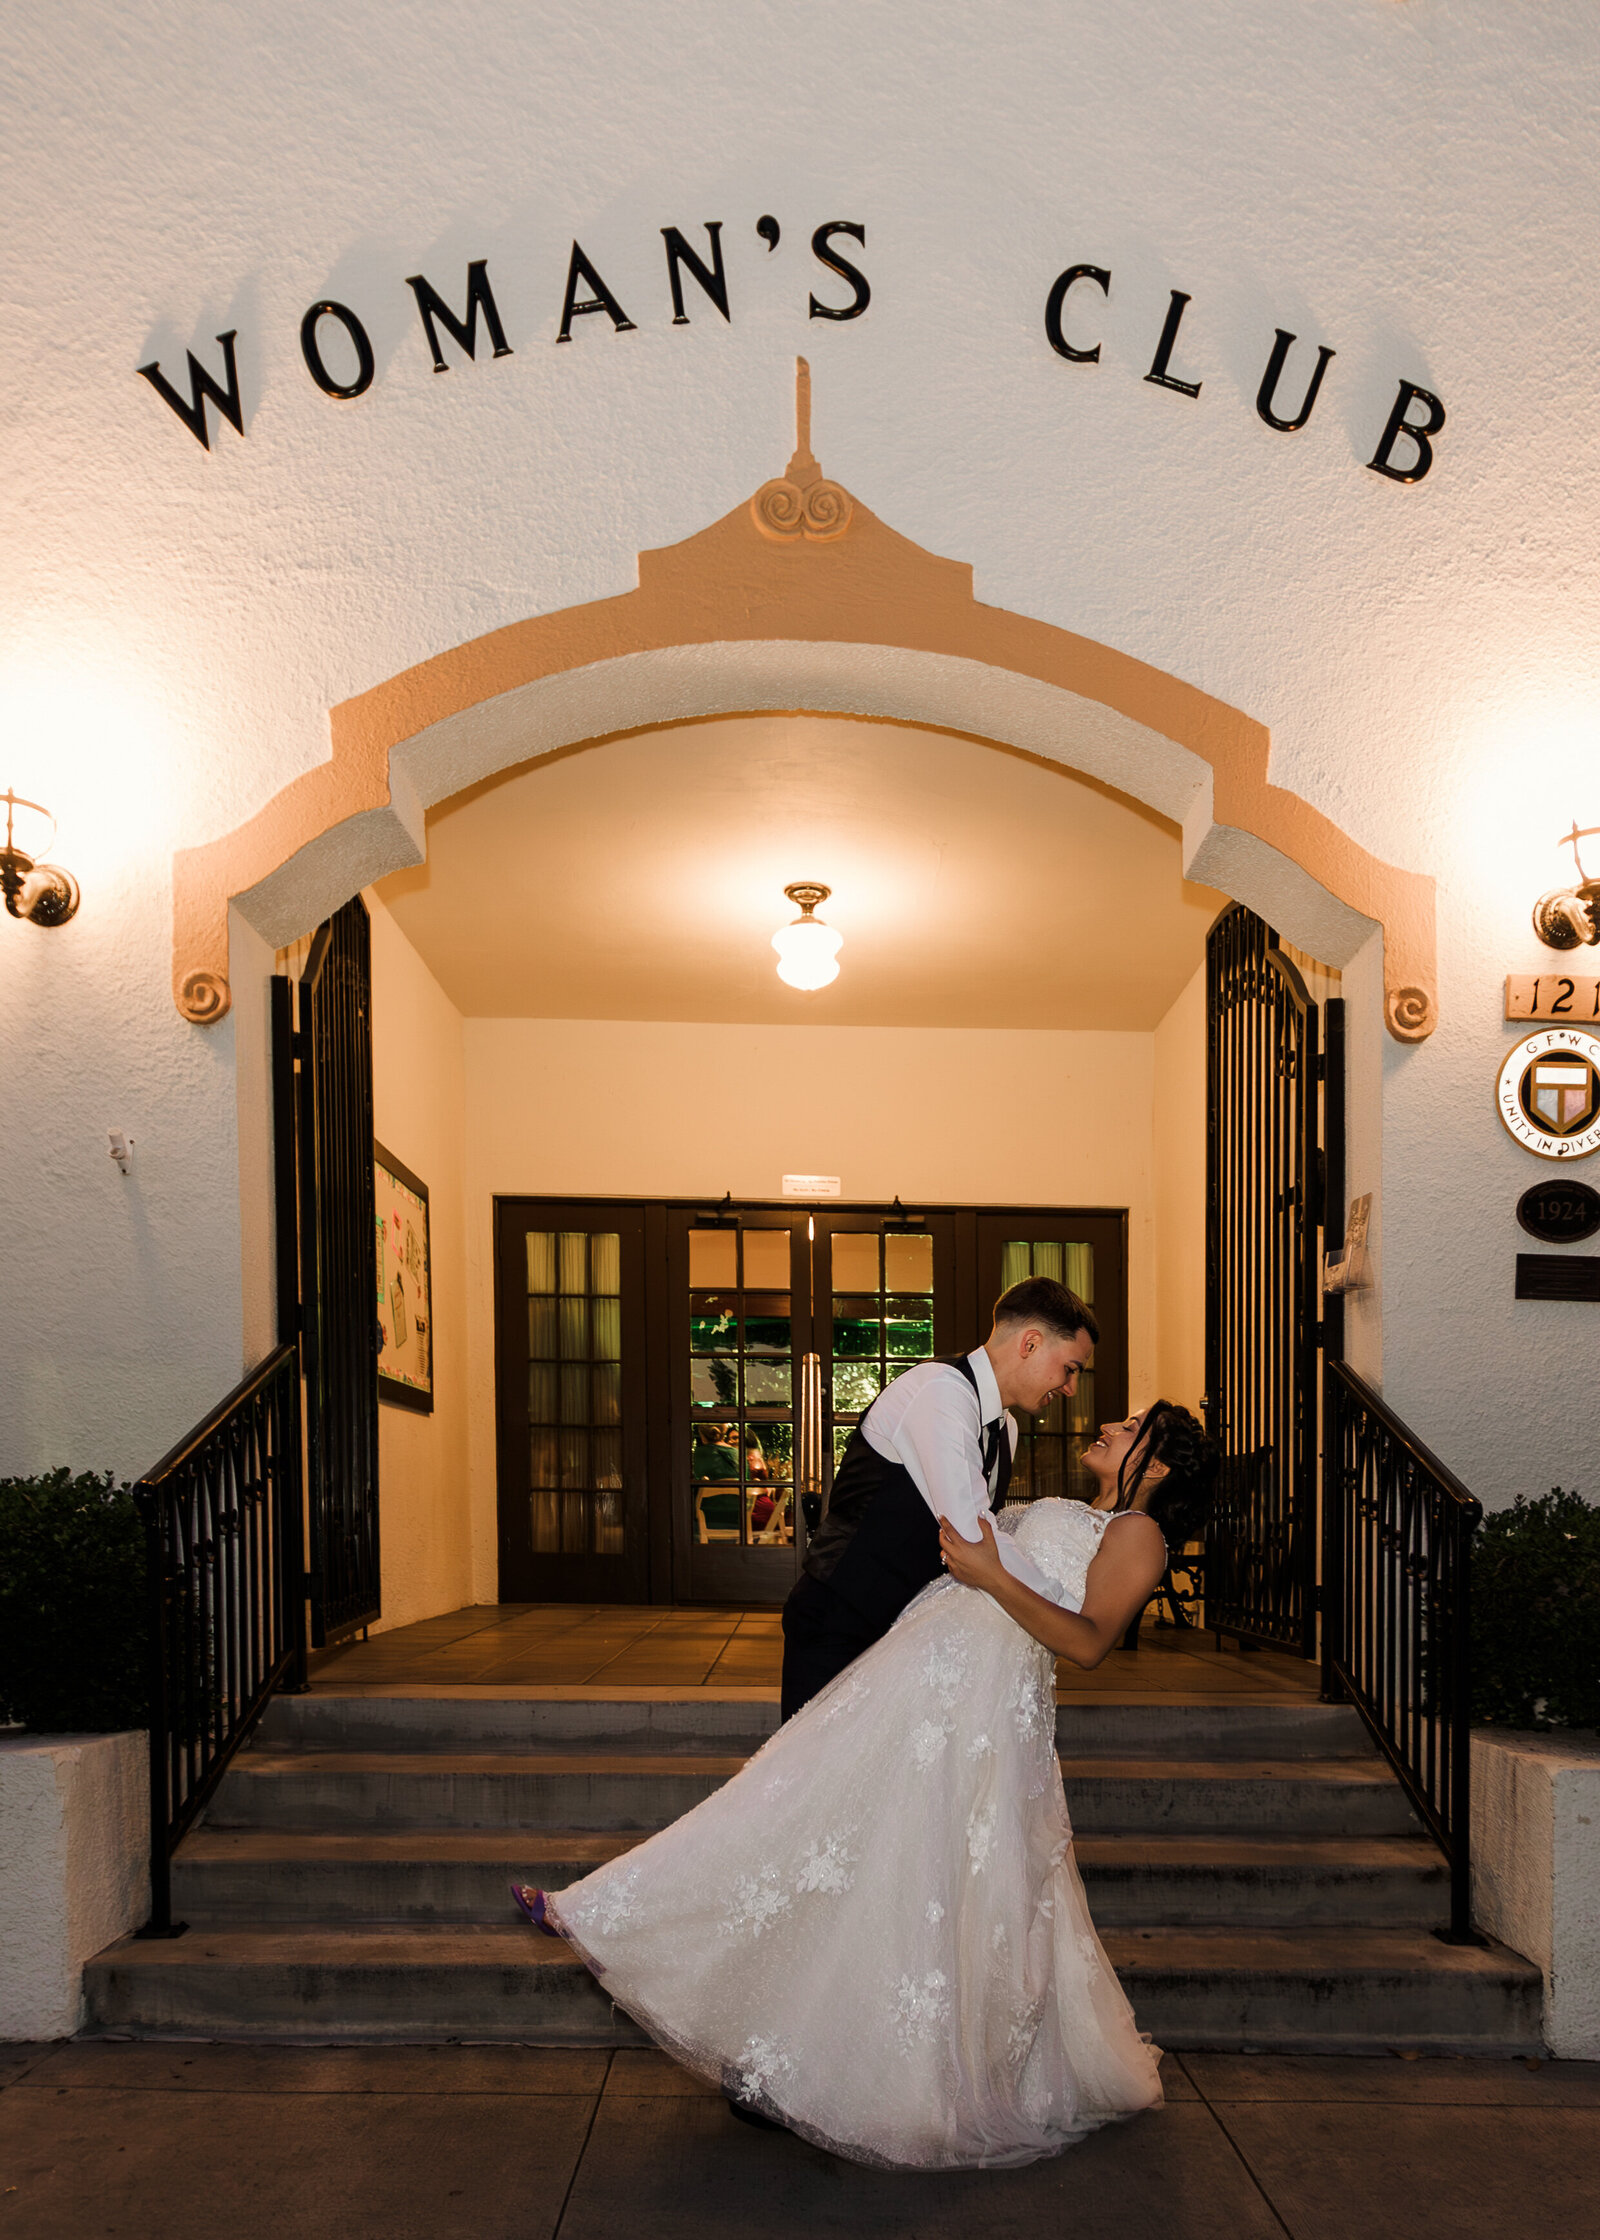 Wedding Portrait at Woman's Club in Orange Ca